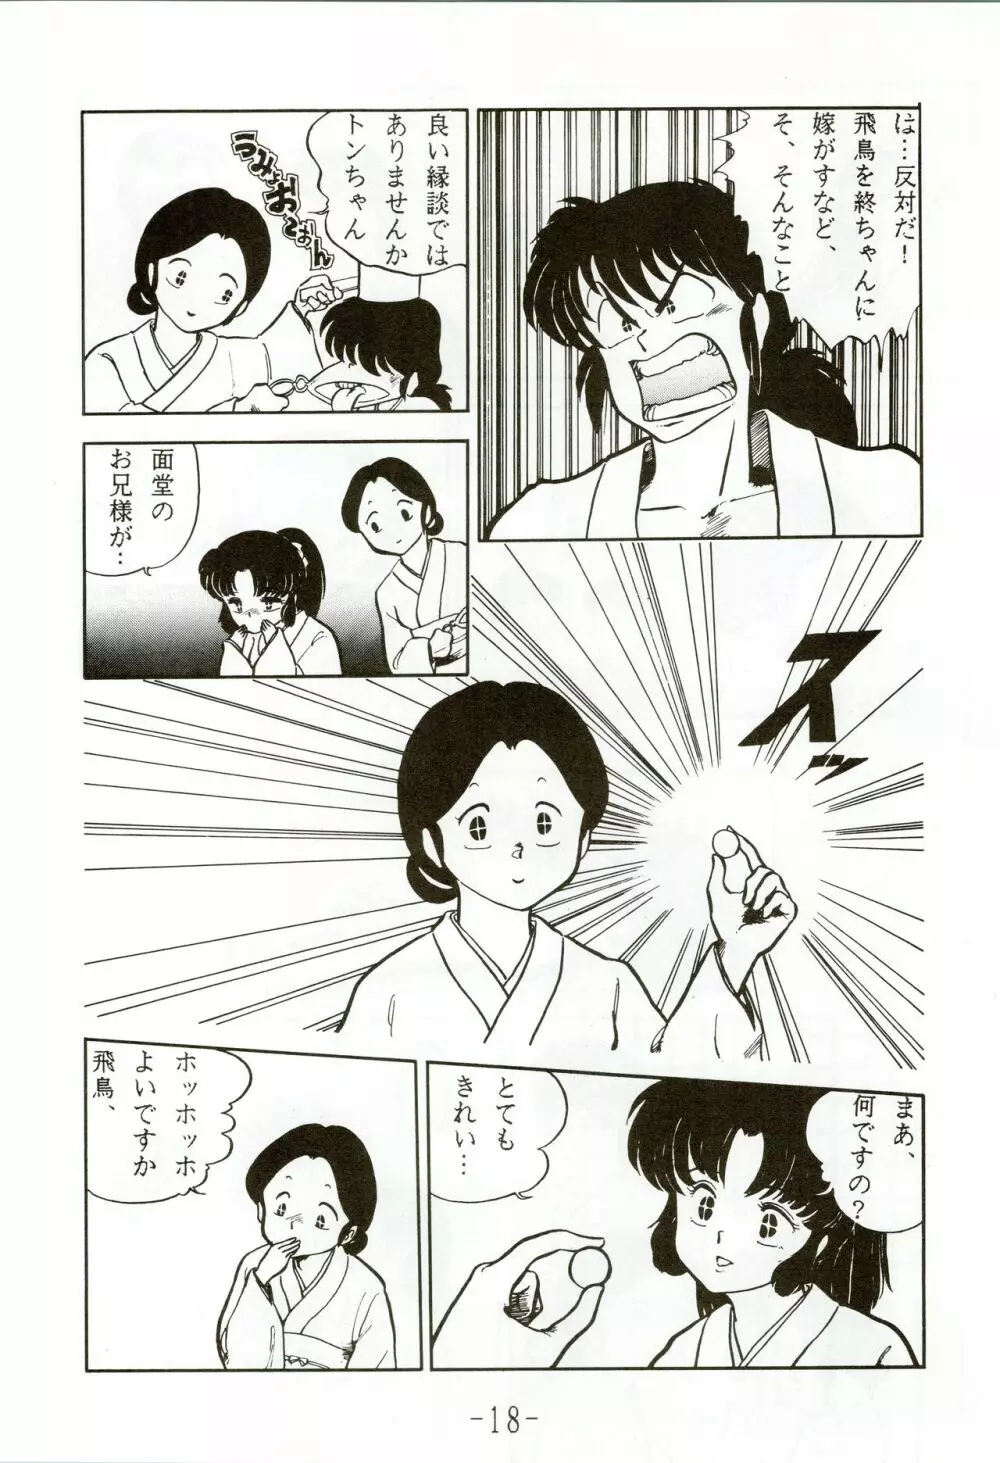 甲冑伝説 - page18